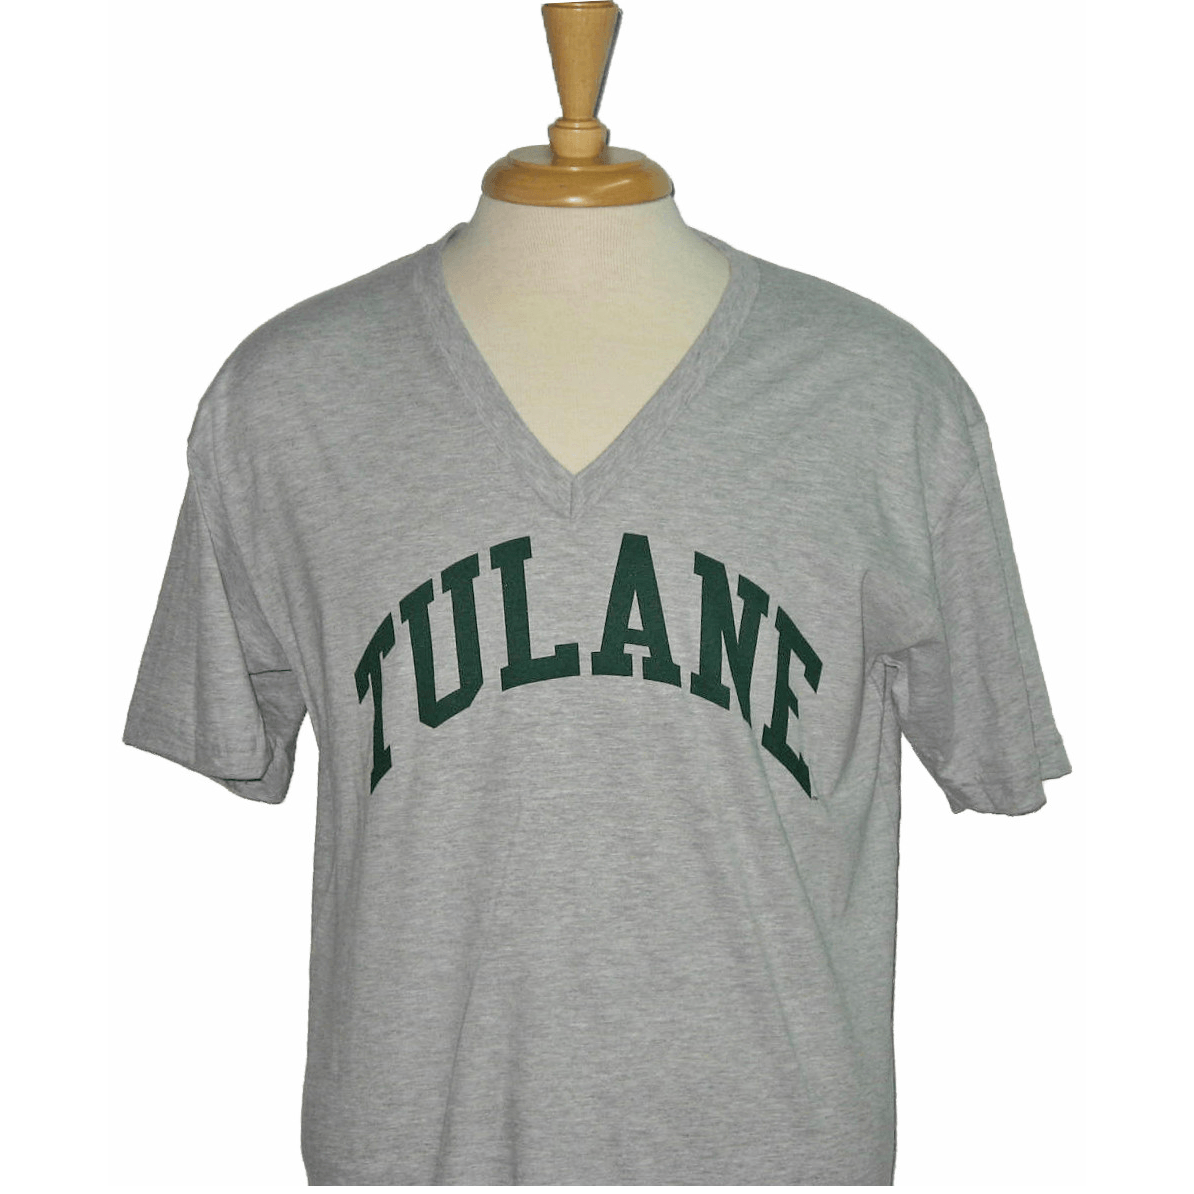 100 Most Popular Clothing Logo - Tulane American Apparel V Neck. Wardrobe